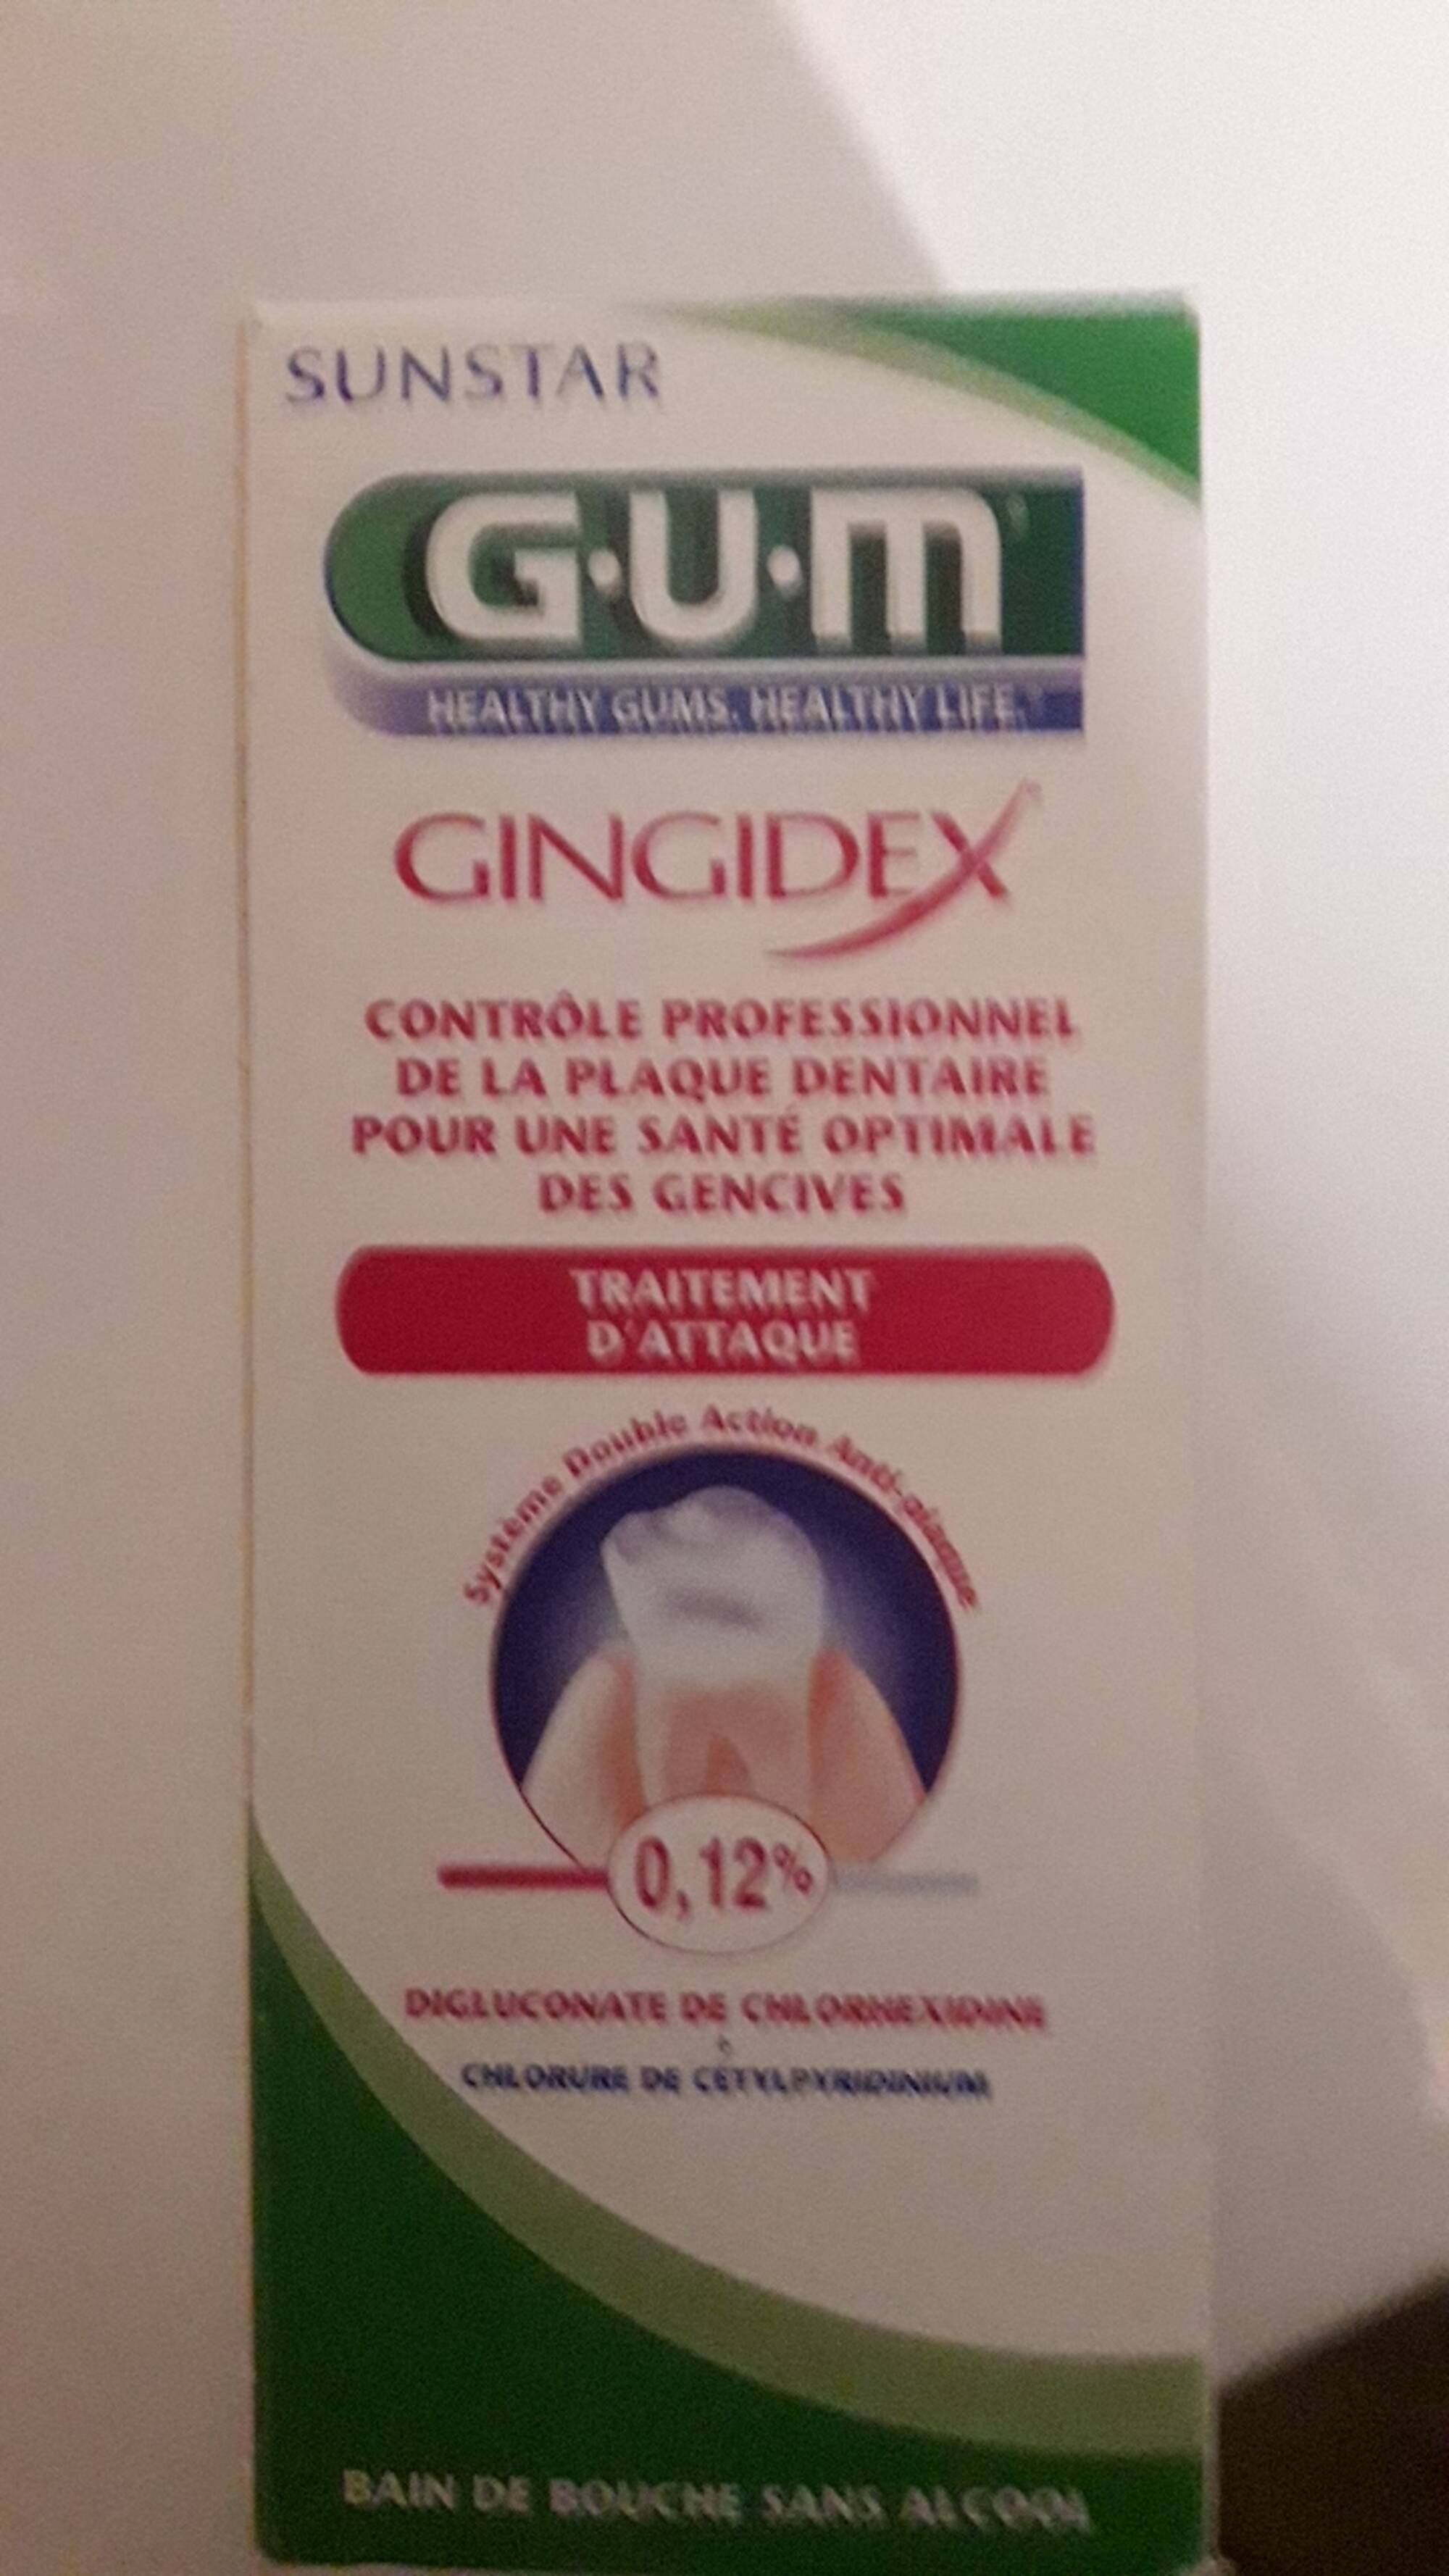 G.U.M - Gingidex -  Bain de bouche traitement d'attaque